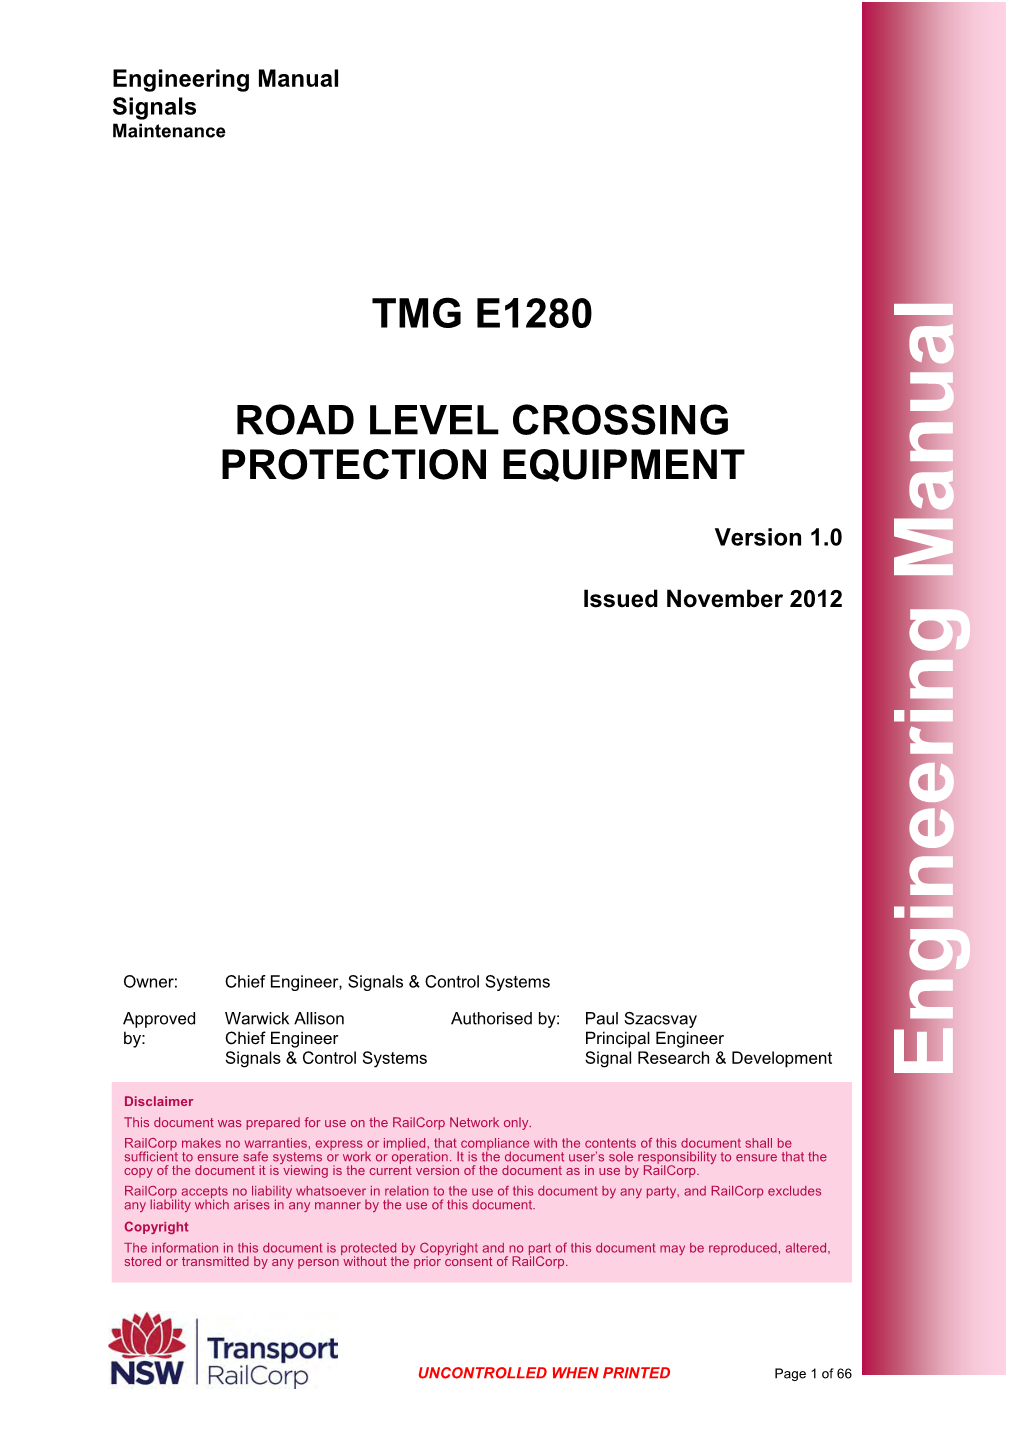 TMG E1280 Road Level Crossing Protection Equipment